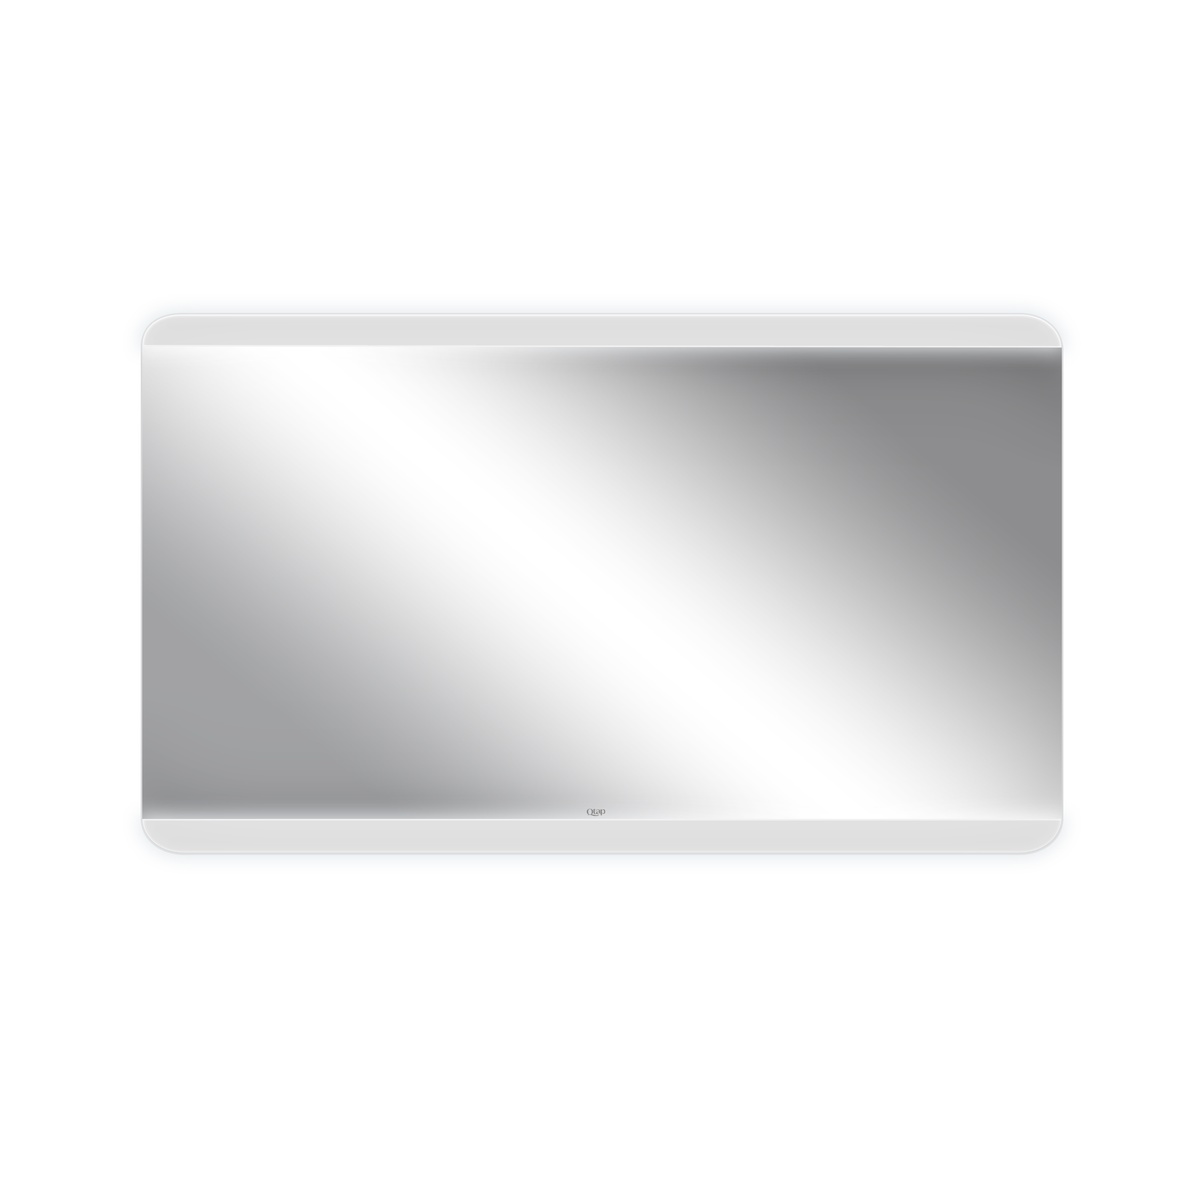 Зеркало прямоугольное в ванную Q-TAP Tern 70x120см c подсветкой QT1778120870120W